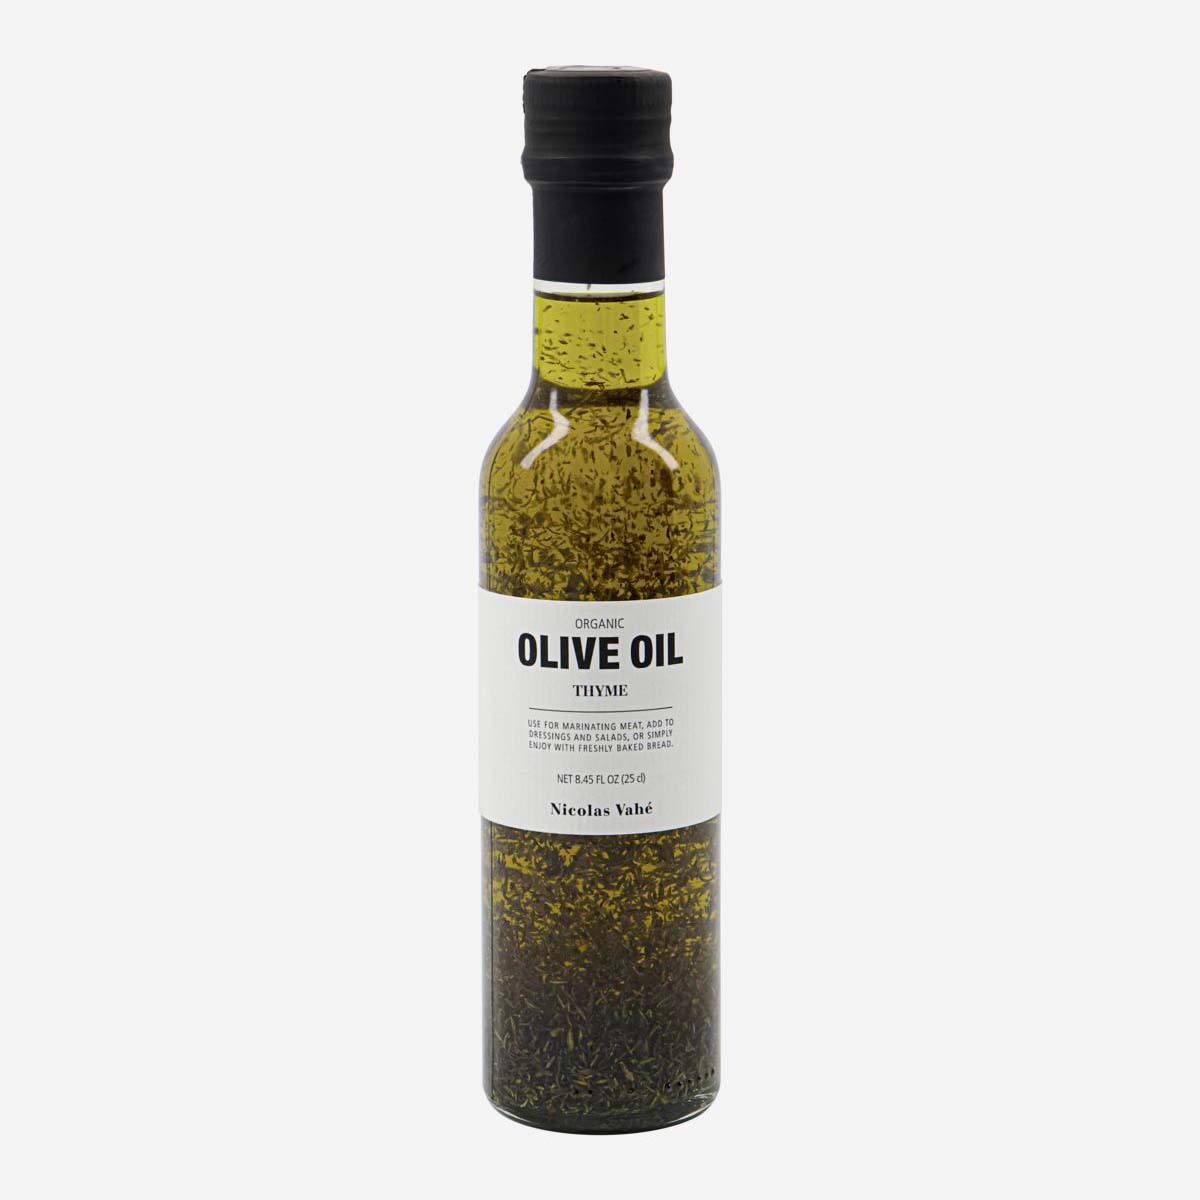 Olivenolie, thyme